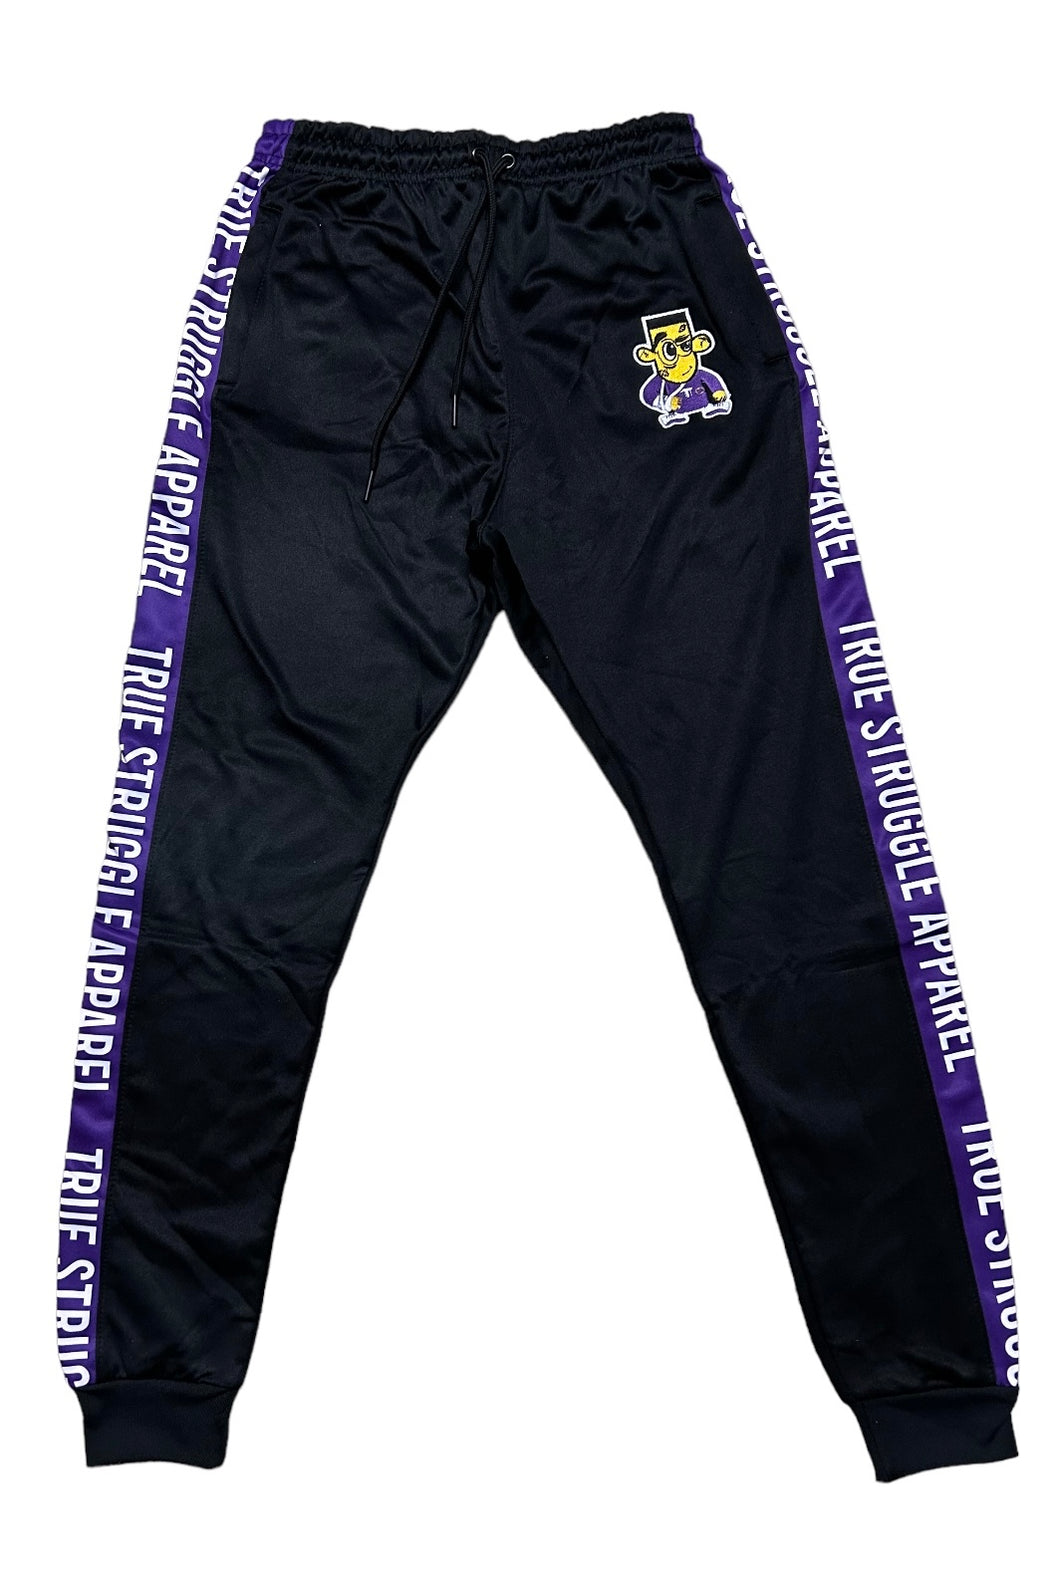 Black & Purple Sweatpants